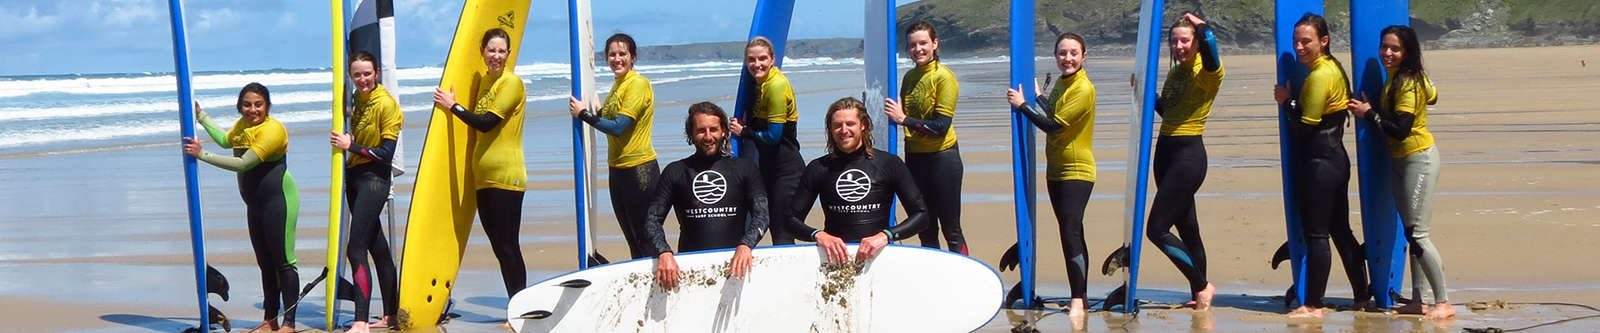 Surf school group